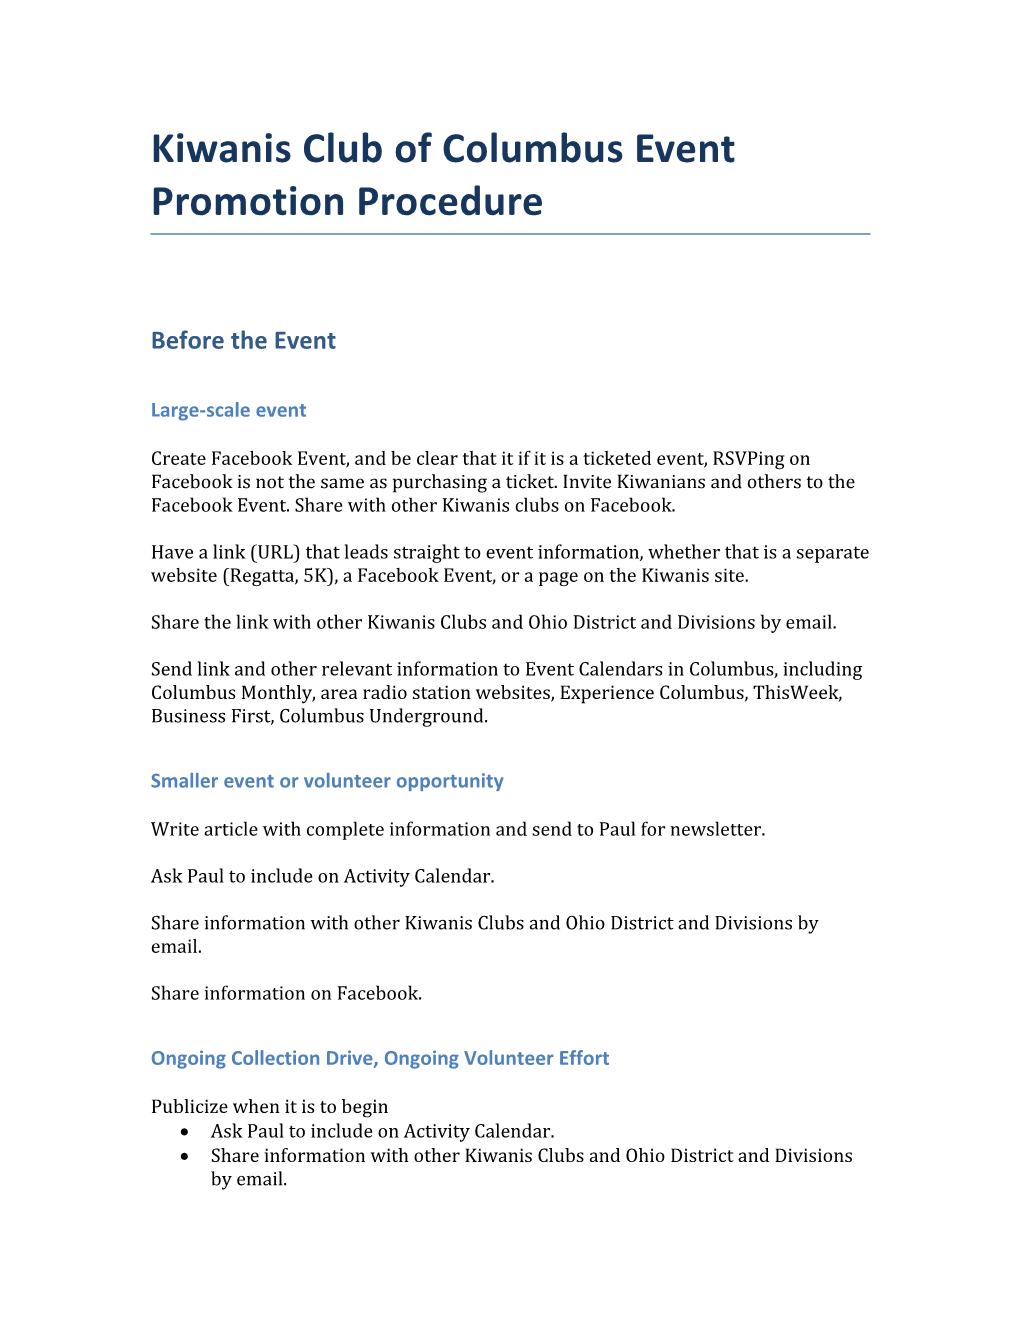 Kiwanis Club of Columbus Event Promotion Procedure